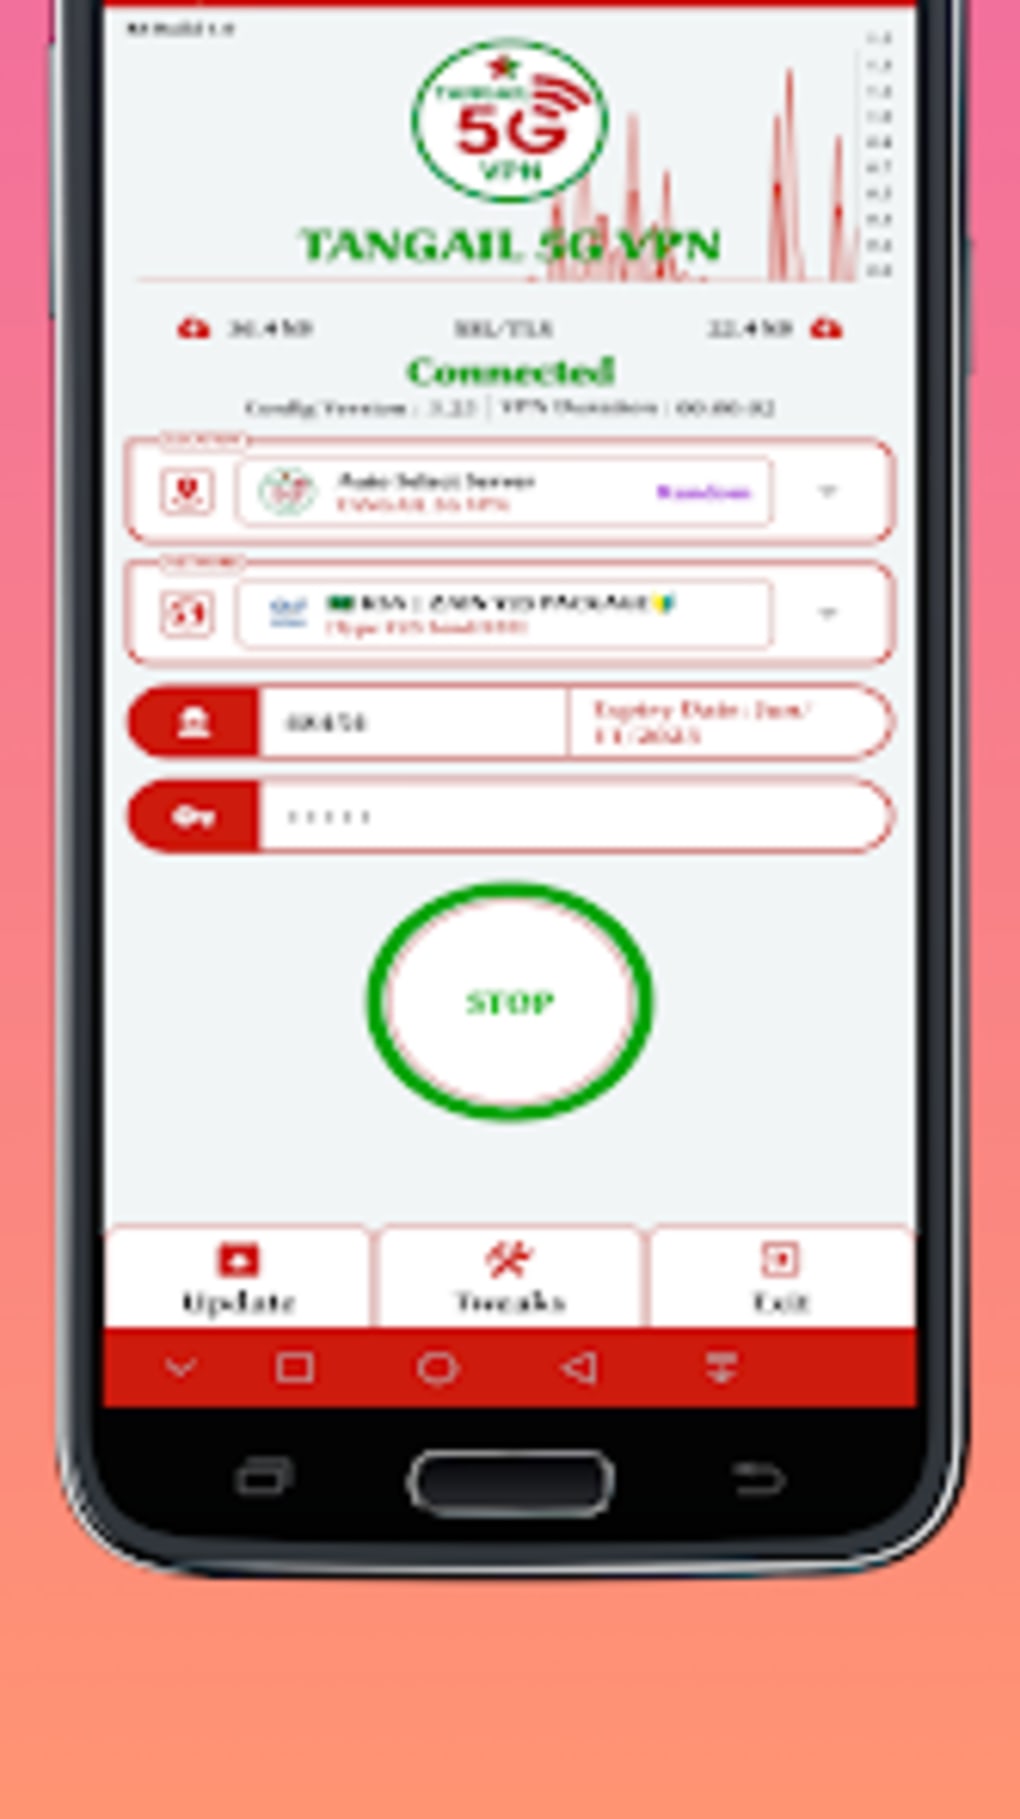 Shellshock Scanner - Zimperium – Apps on Google Play